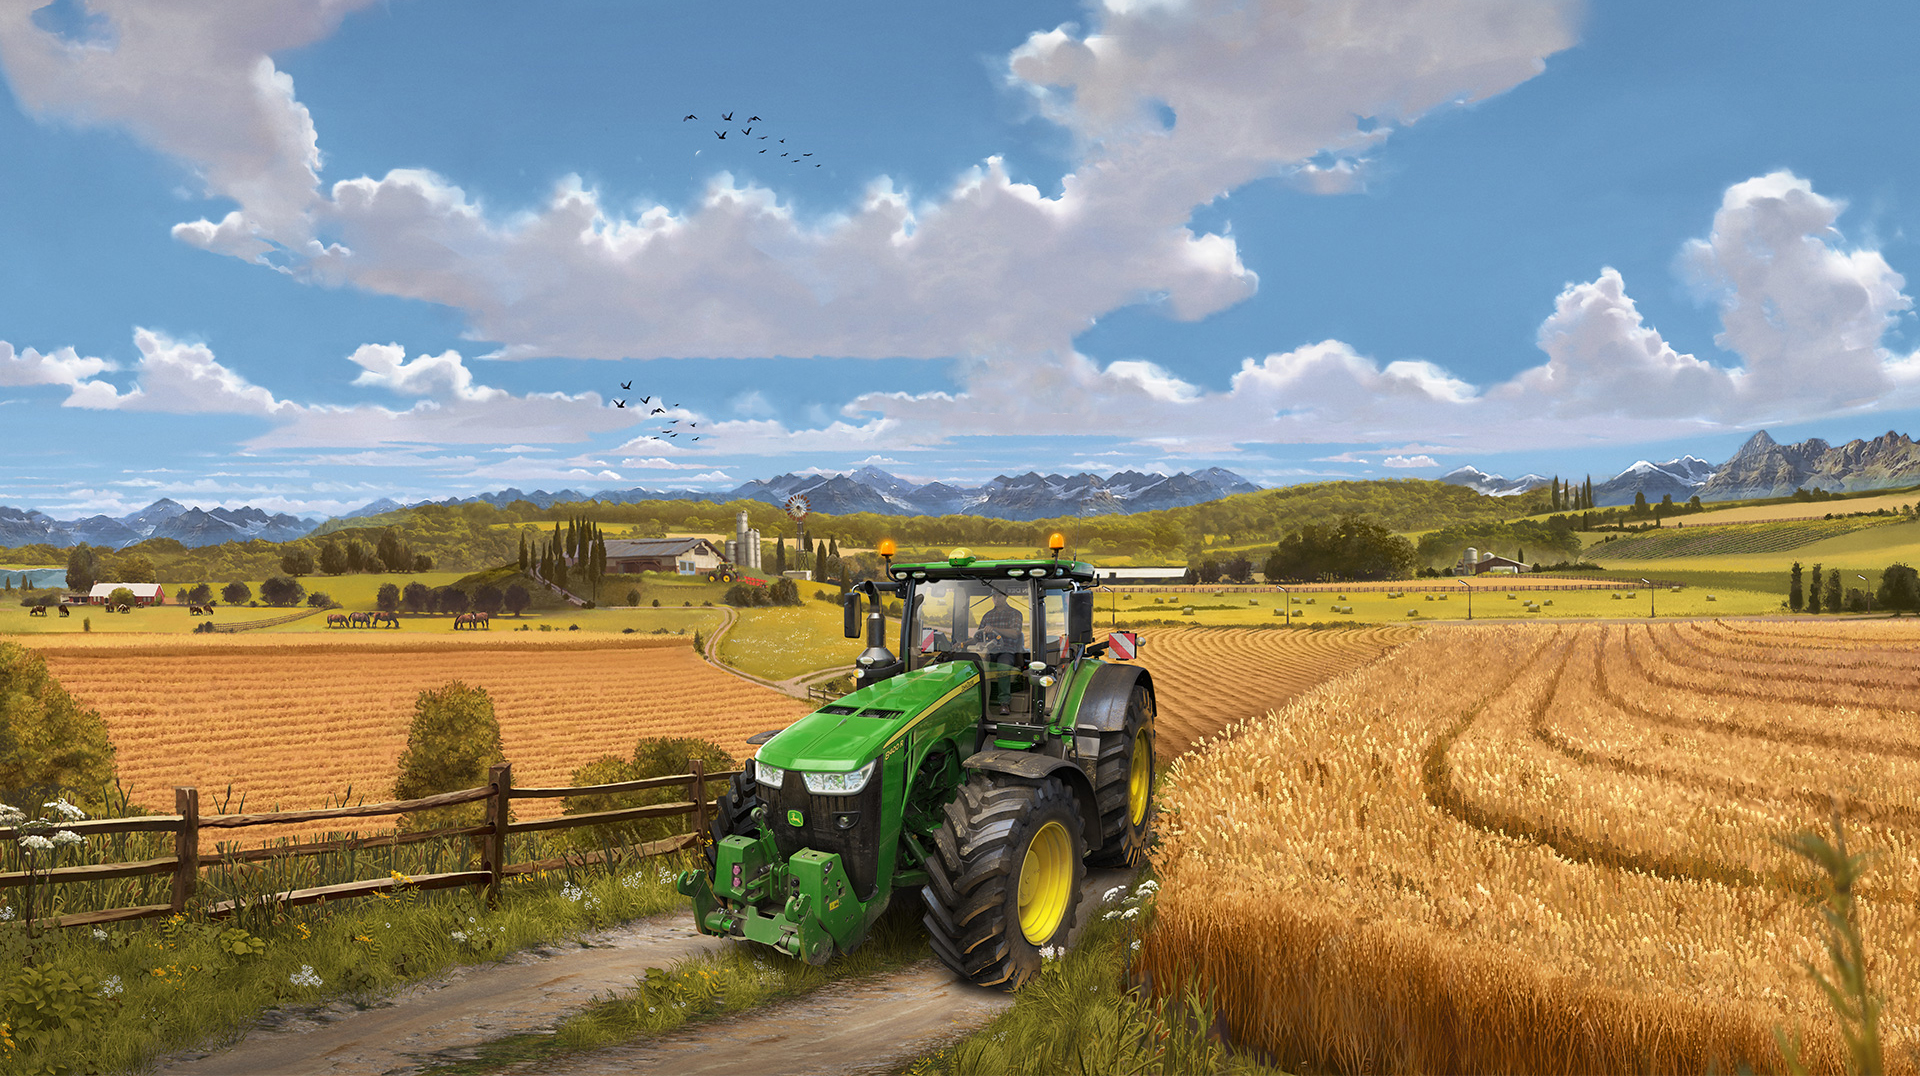 Download & Play Farming Simulator 20 on PC & Mac (Emulator)